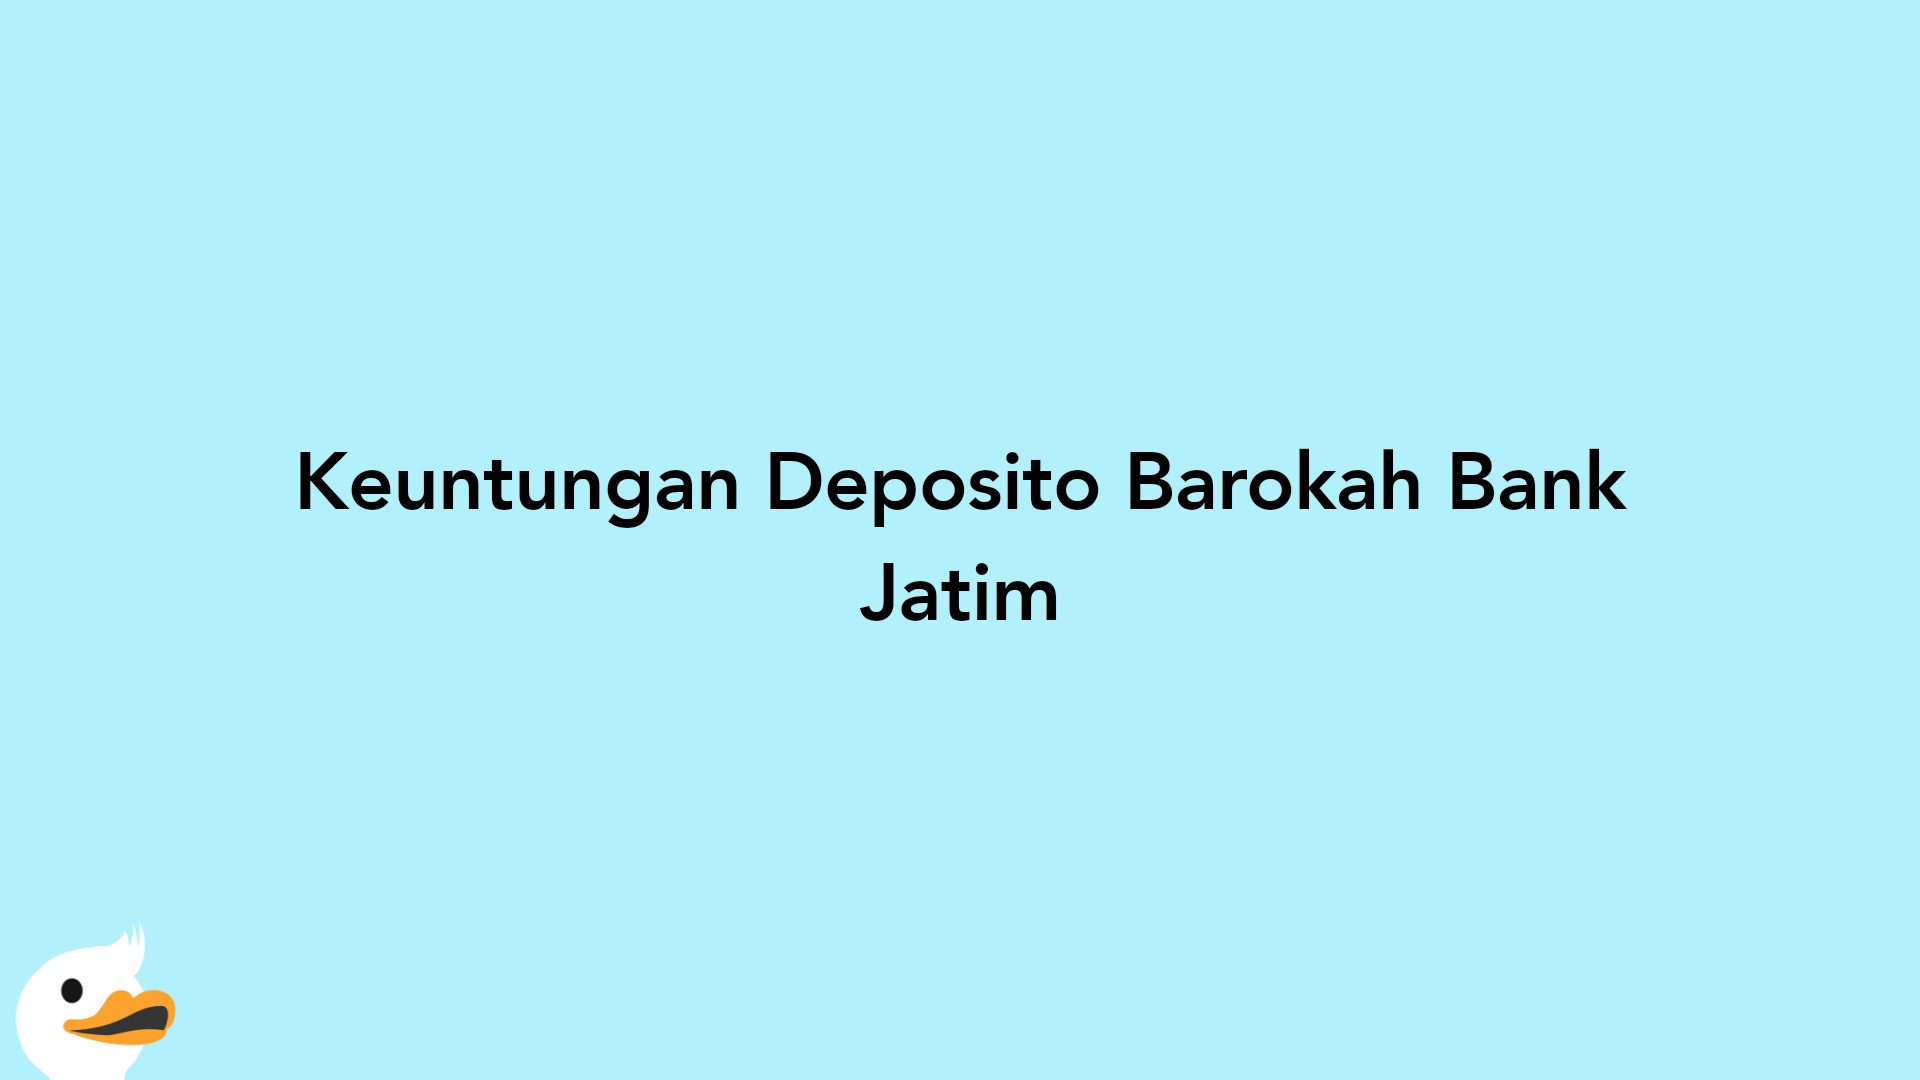 Keuntungan Deposito Barokah Bank Jatim